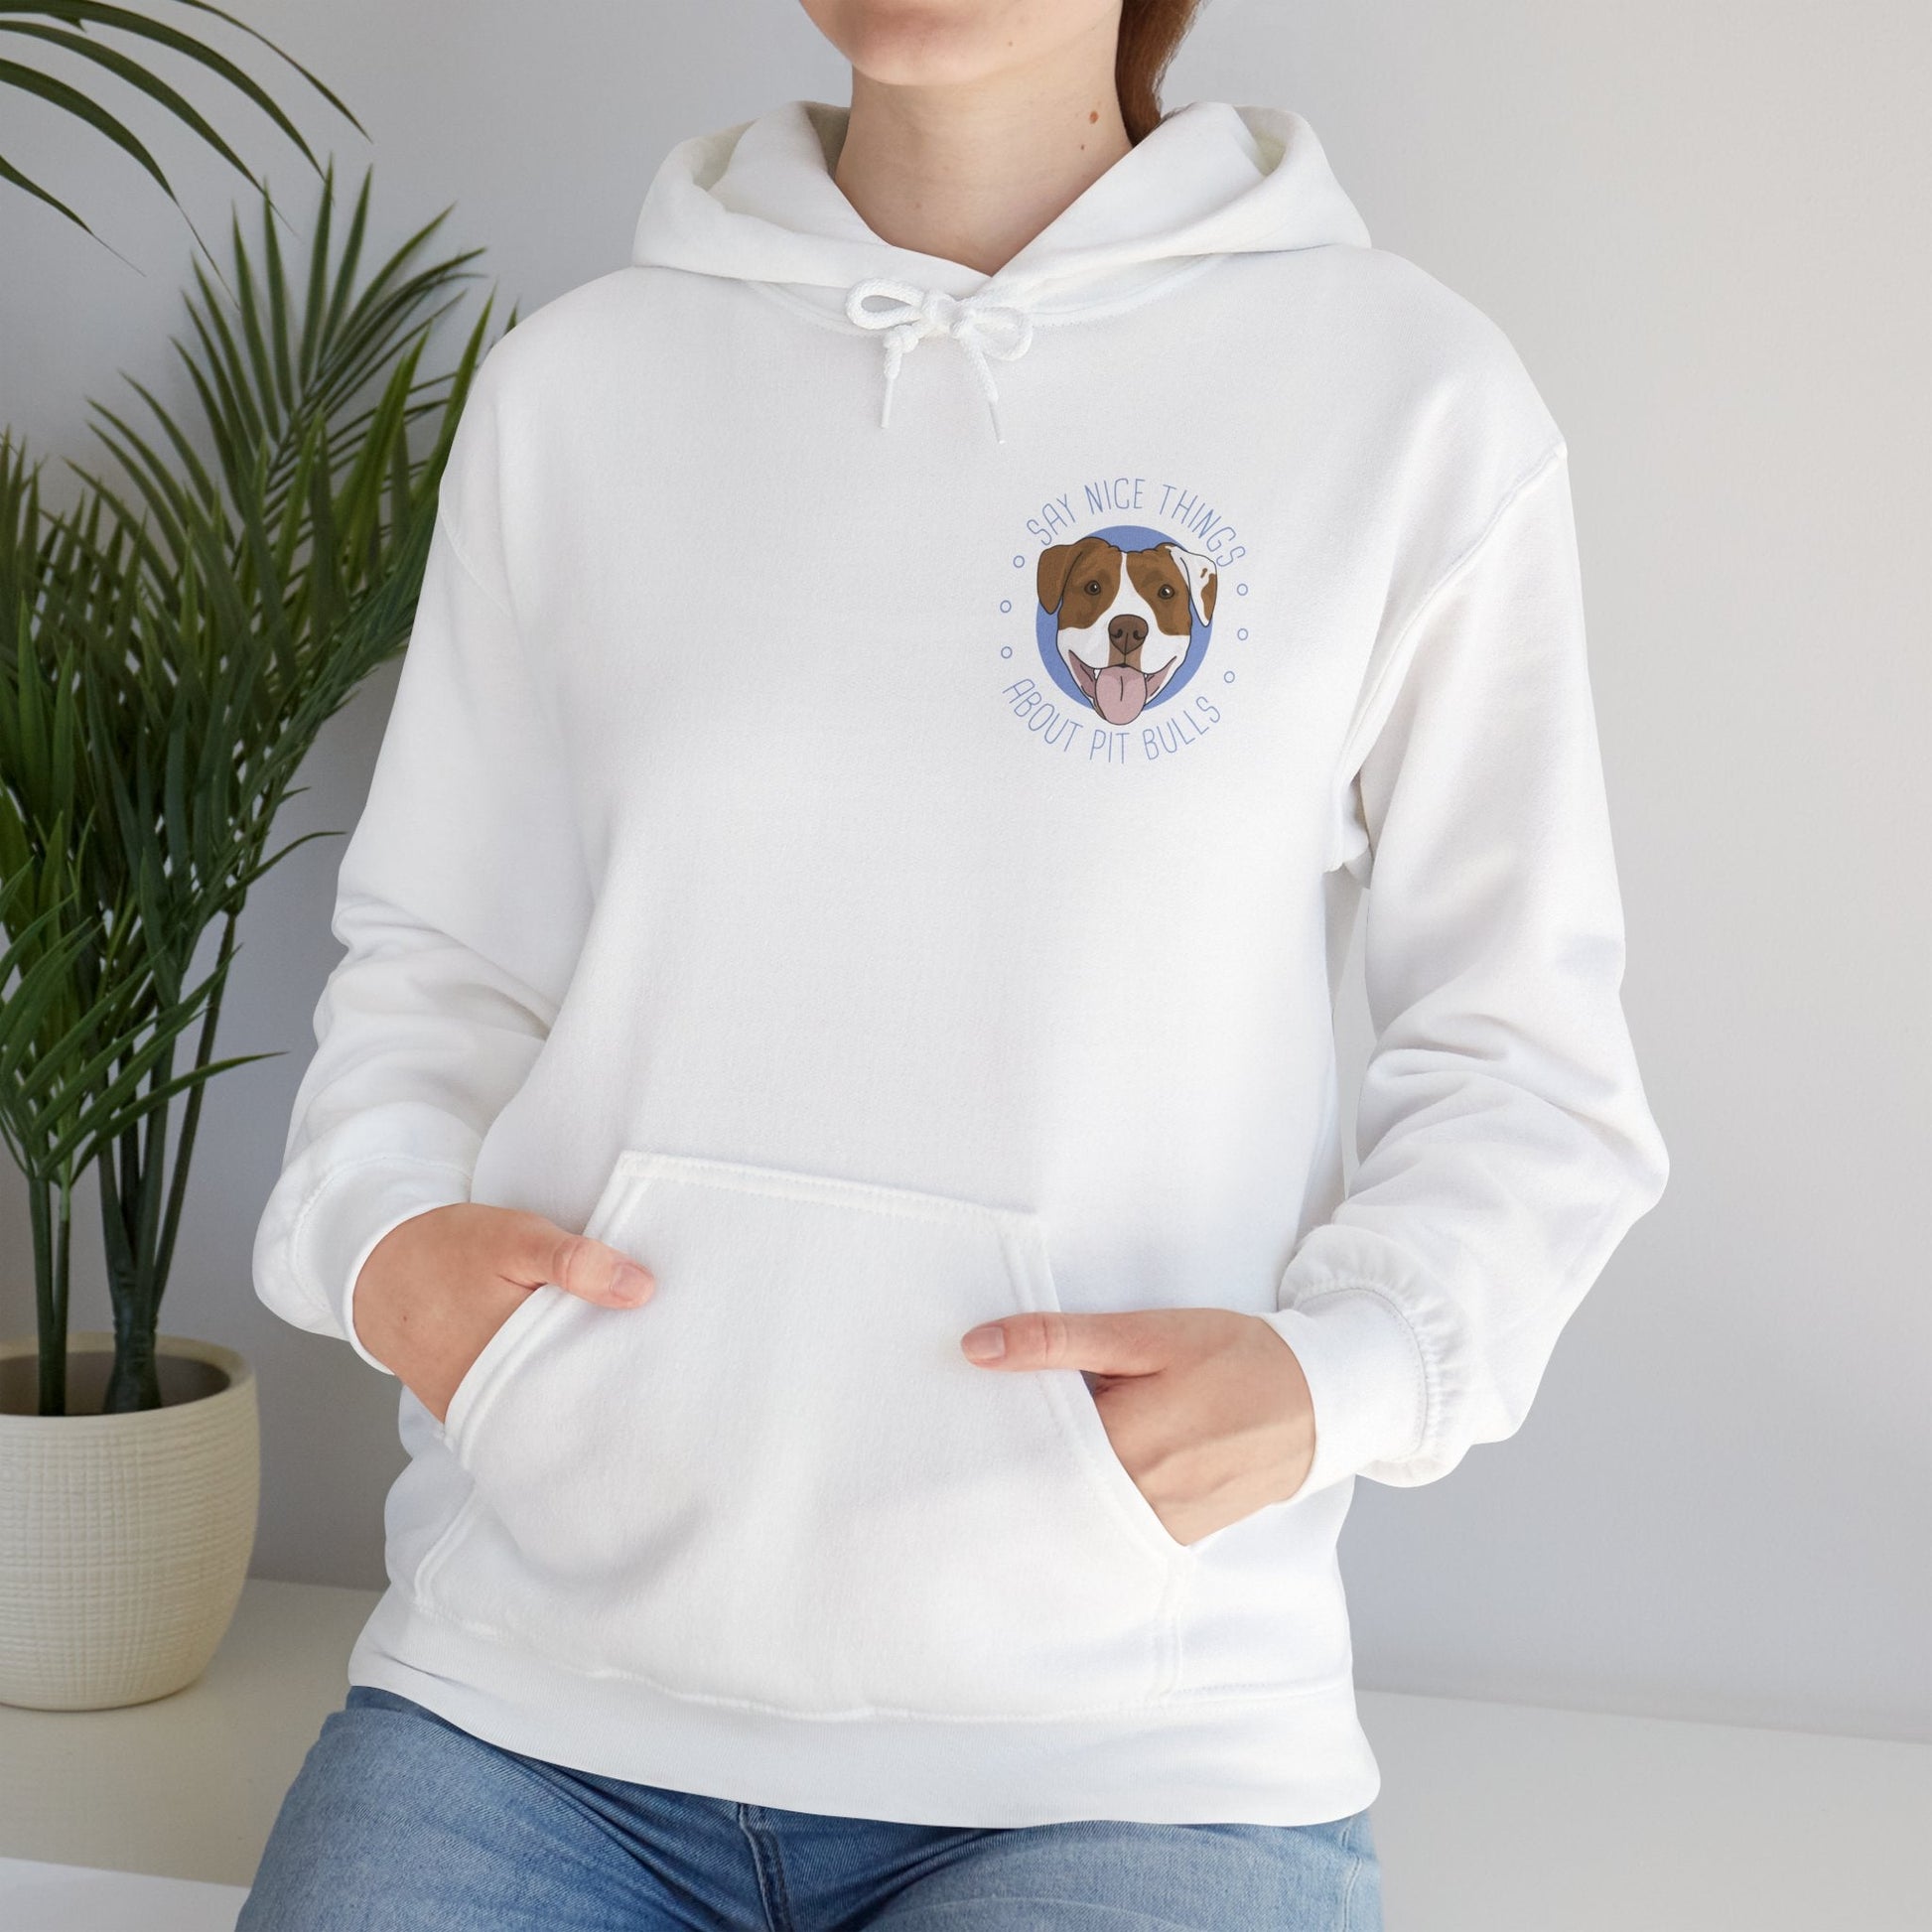 Say Nice Things About Pit Bulls | Pocket Print | Hooded Sweatshirt - Detezi Designs-12142129986507825089